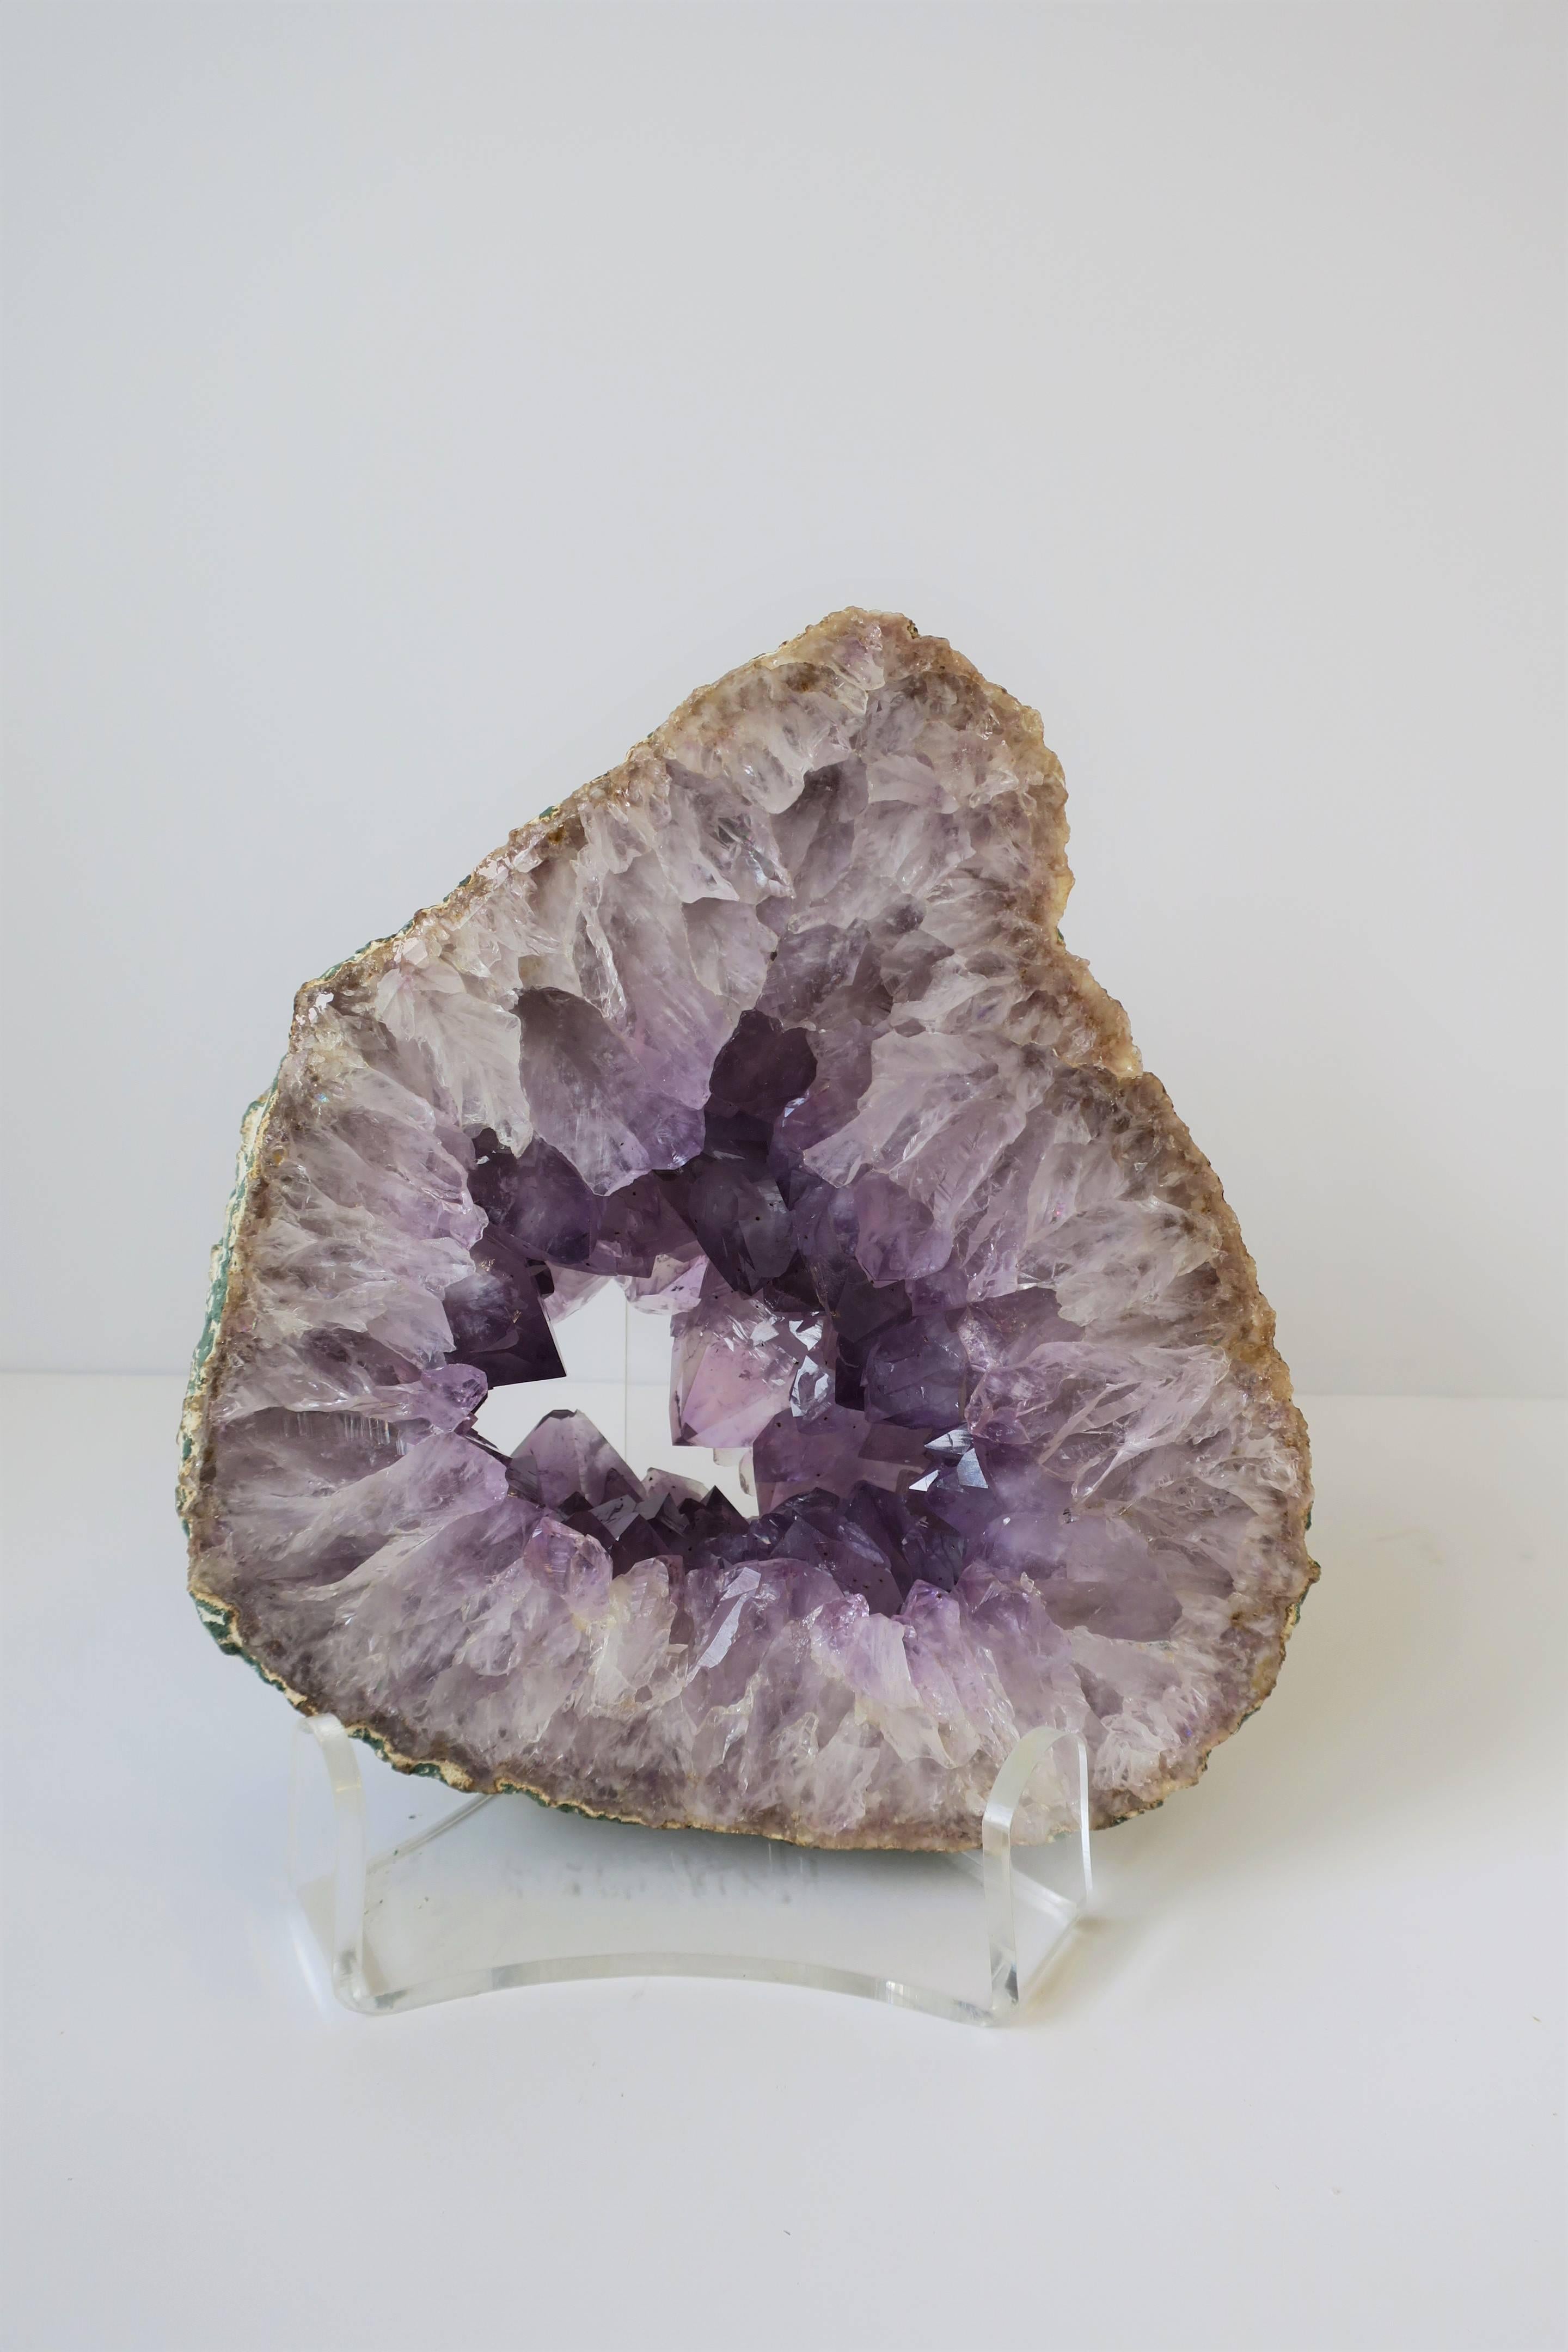 Organic Modern Large Natural Purple Amethyst Crystal Sculpture